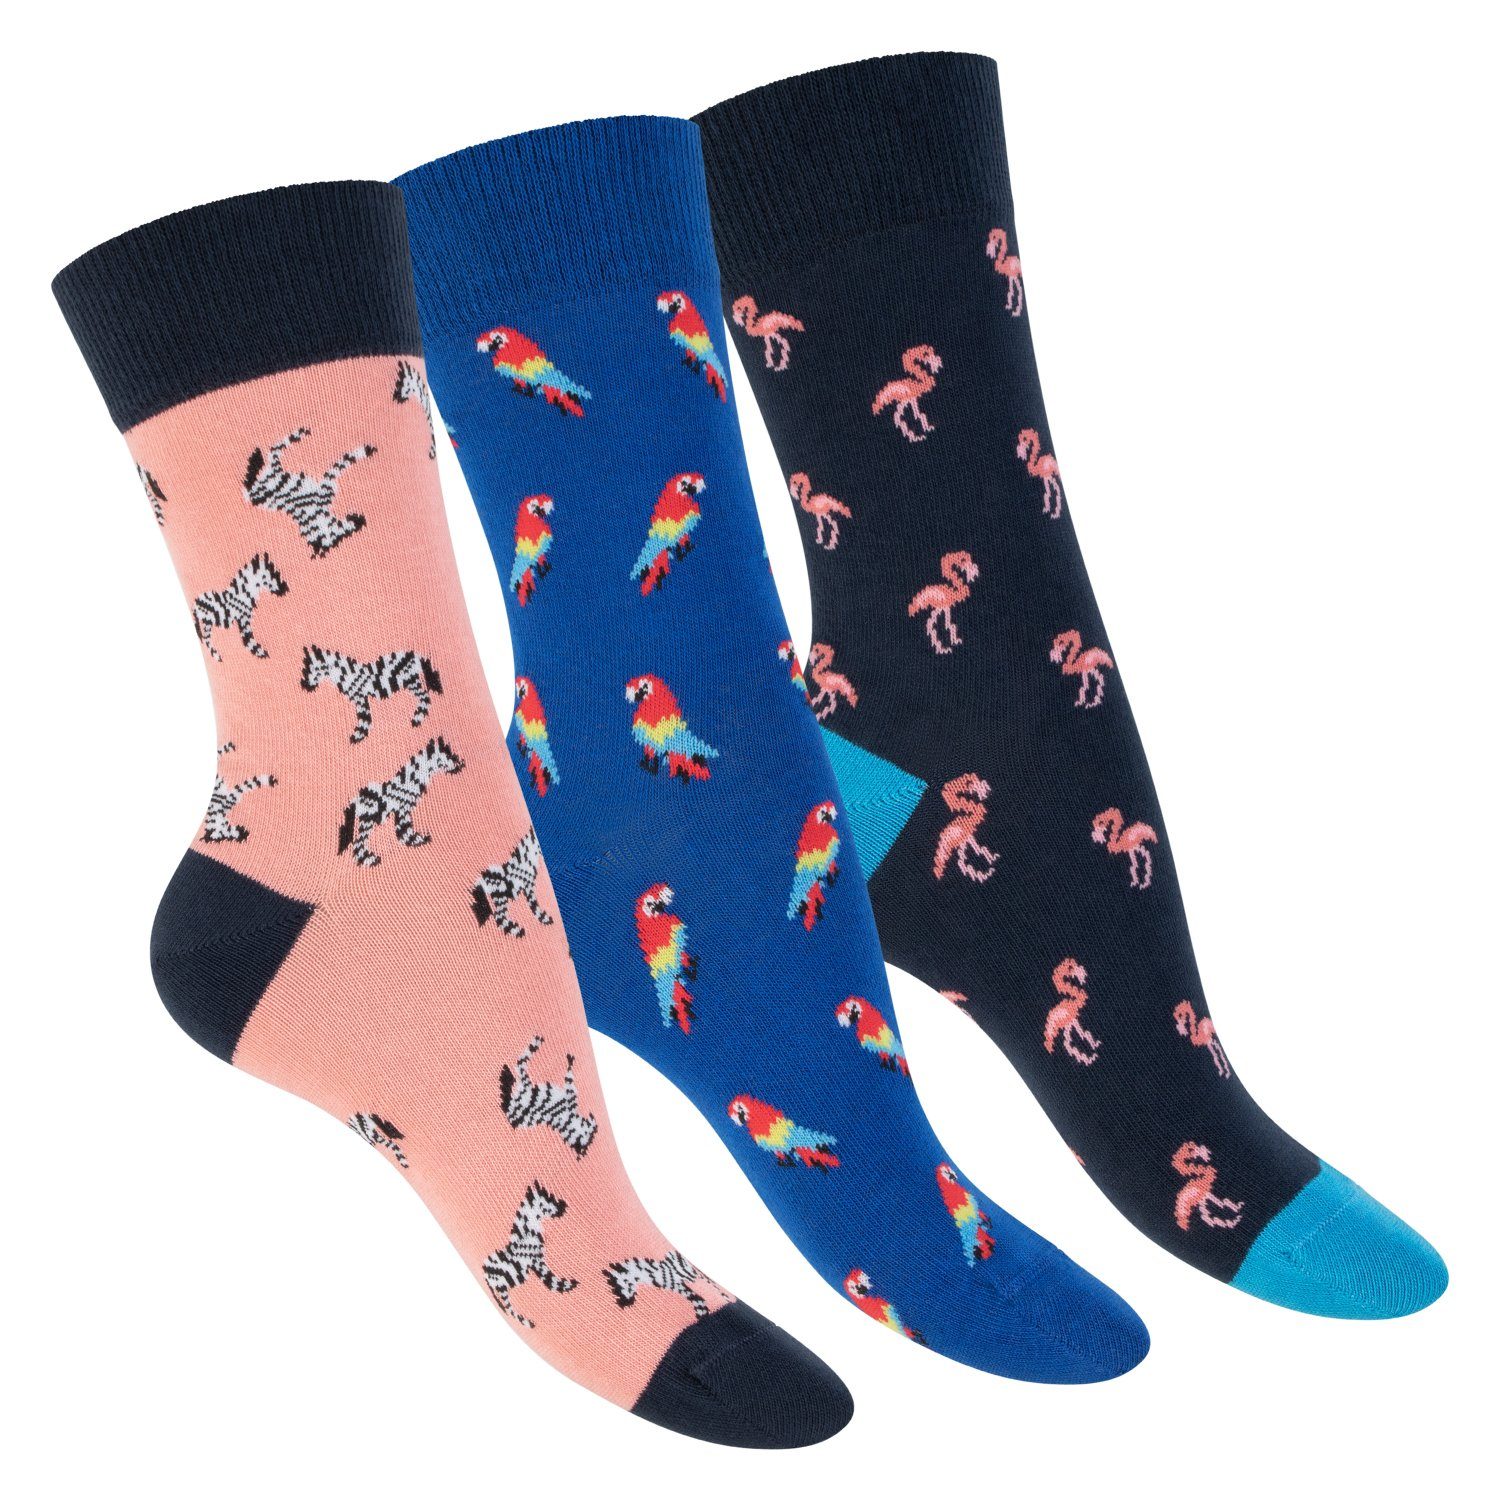 Footstar Basicsocken Damen/Herren Bunte Motiv Socken, Modische Baumwollsocken Flamingo